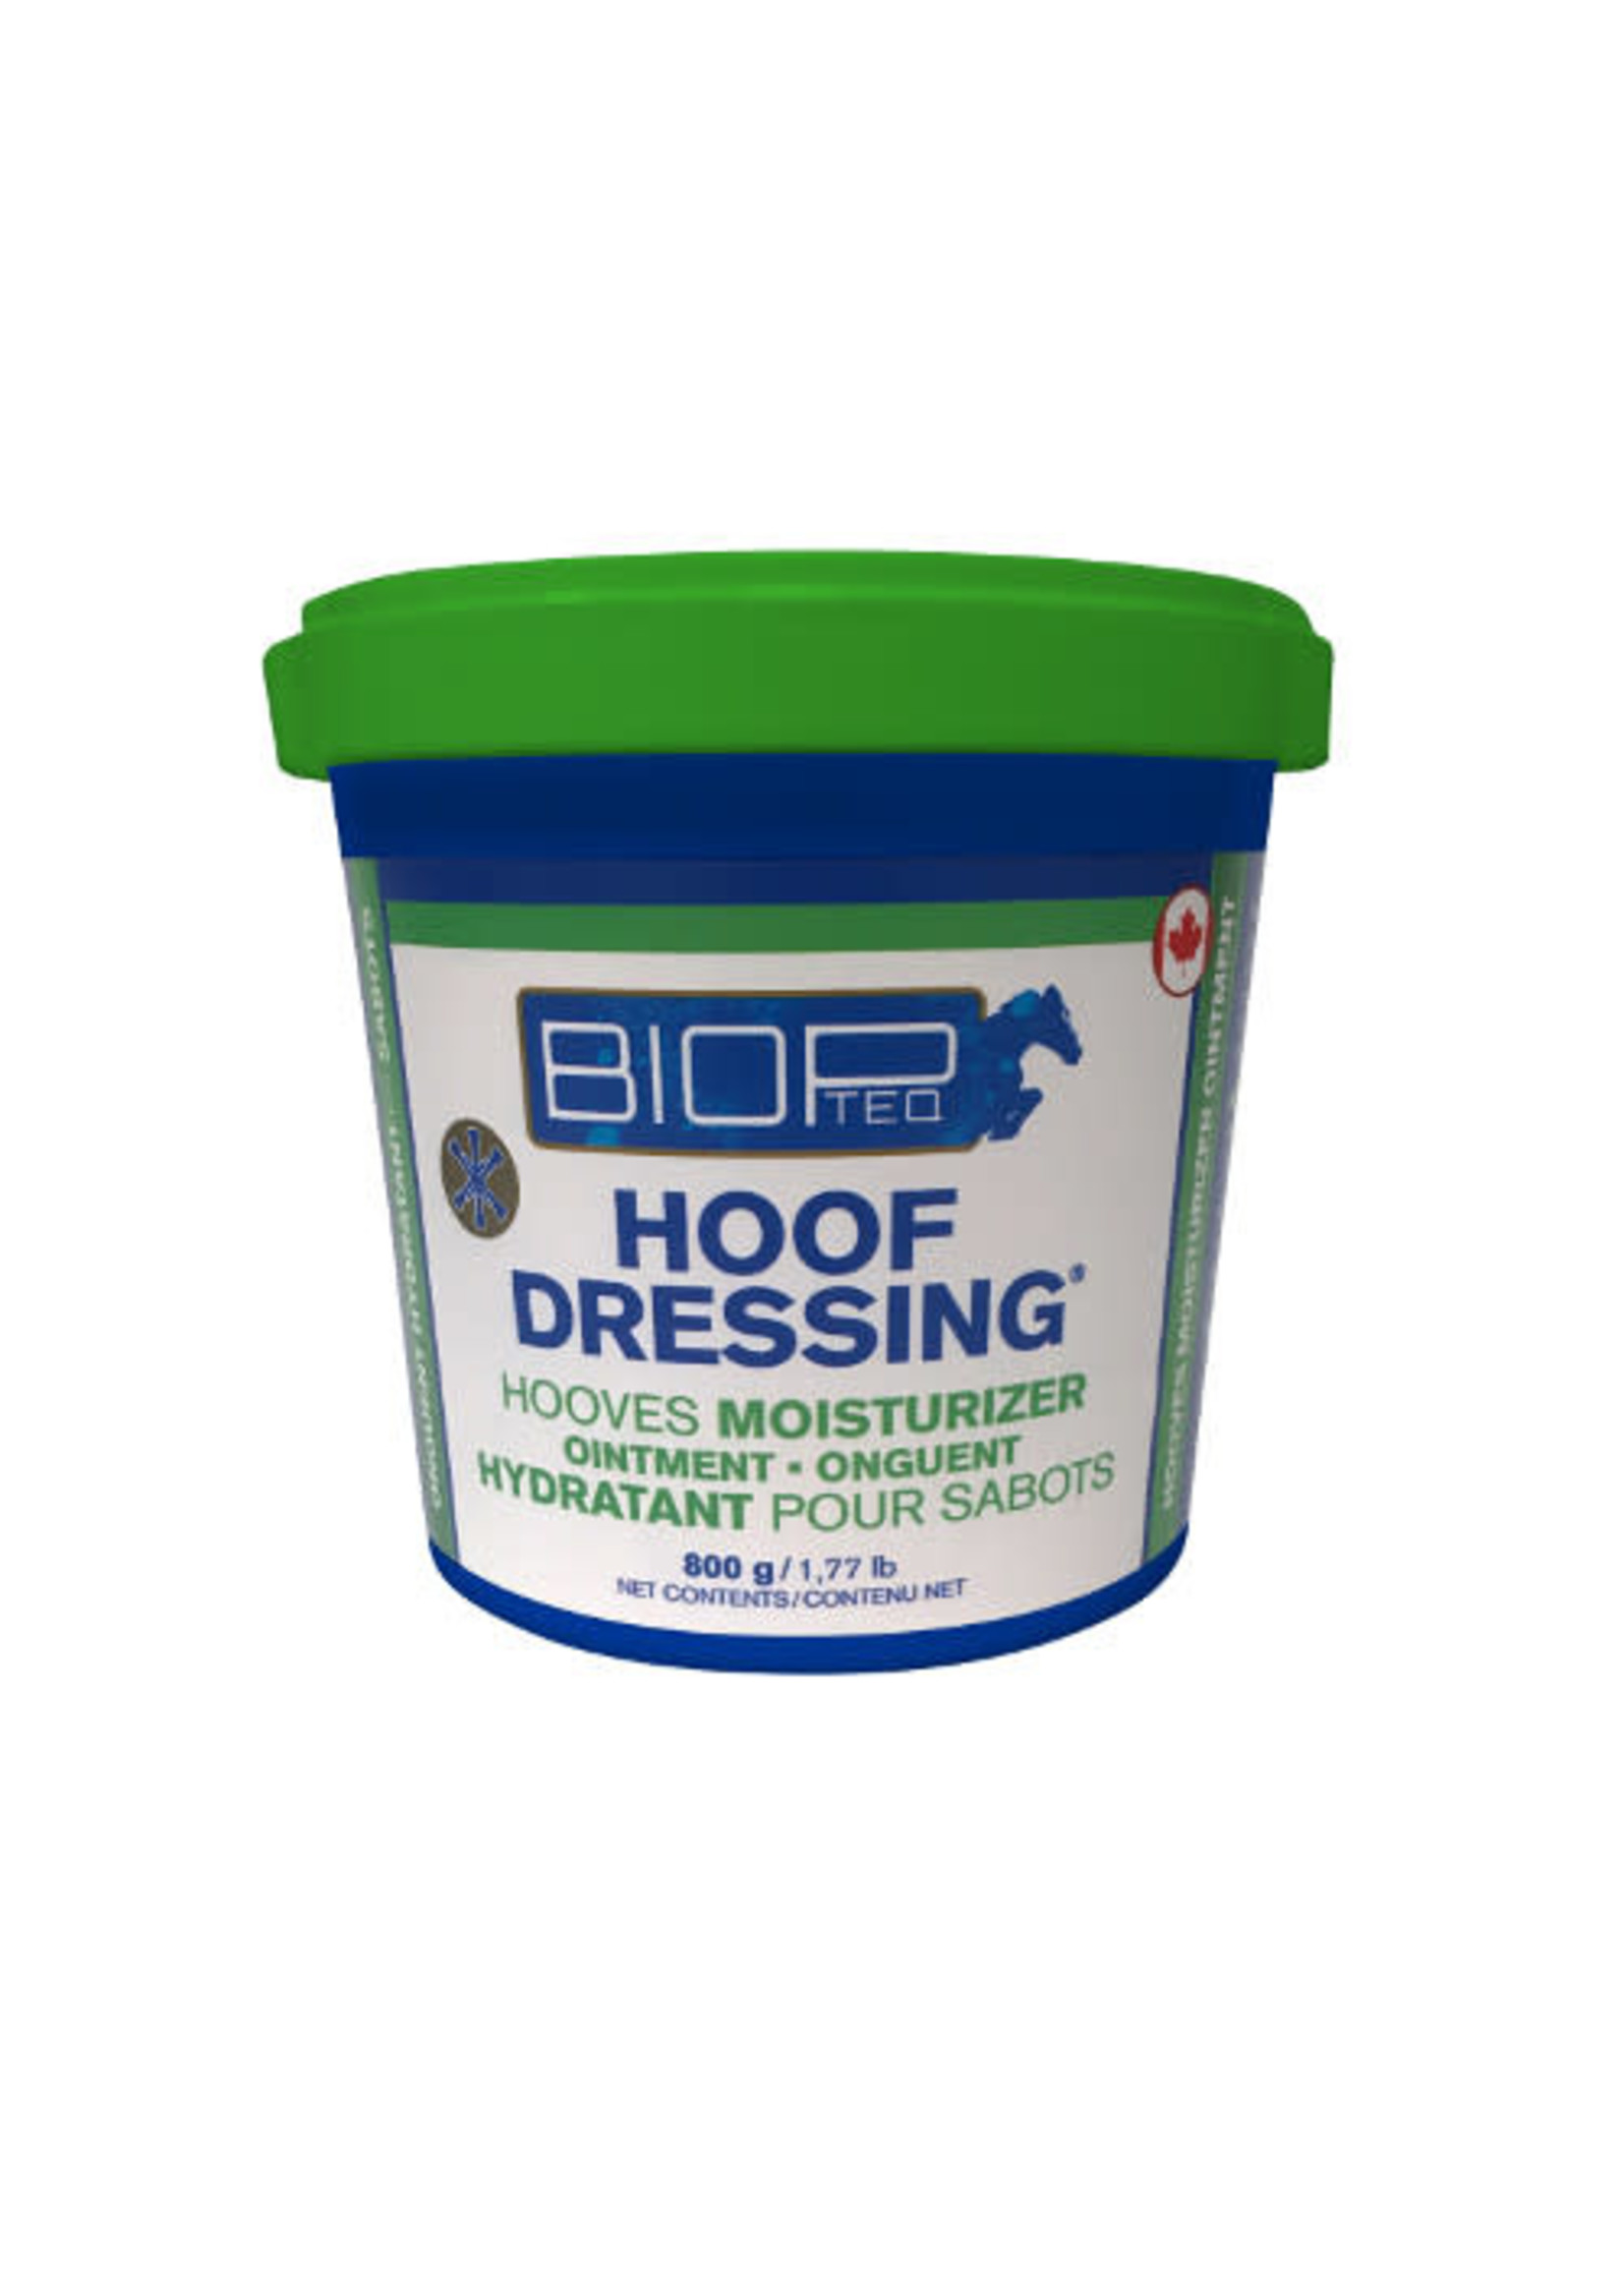 Biopteq Hoof dressing 800 g, Biopteq